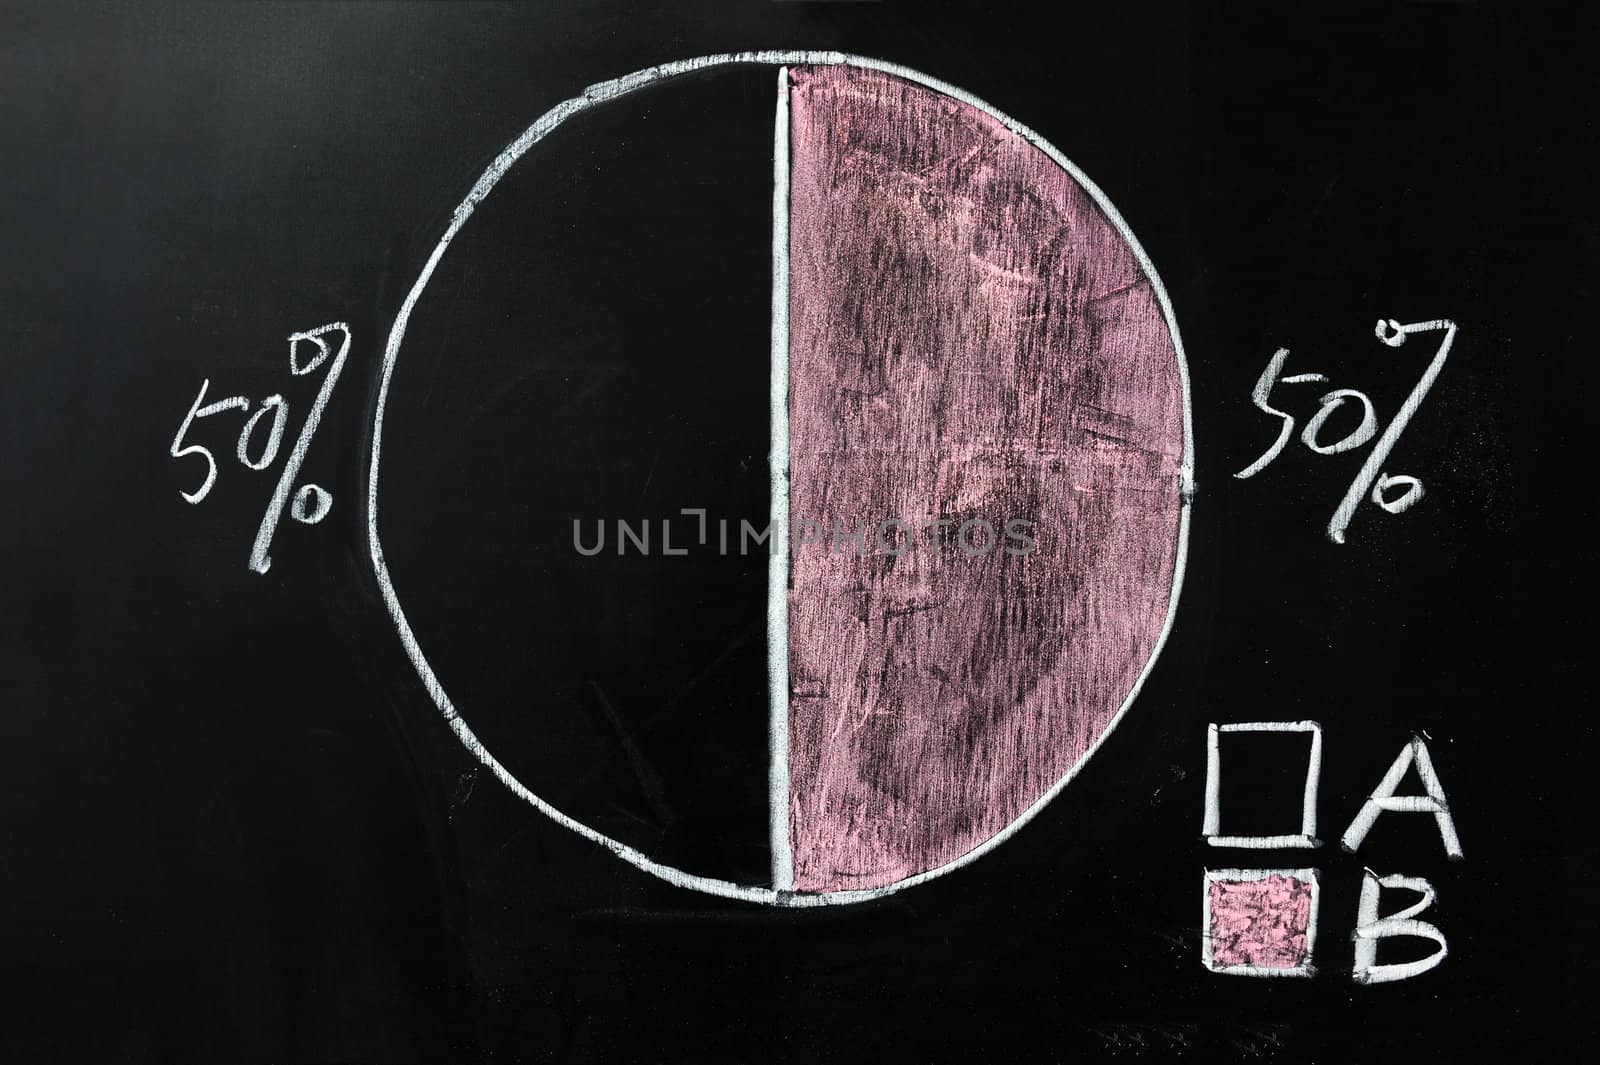 Pie chart drawn on the chalkboard